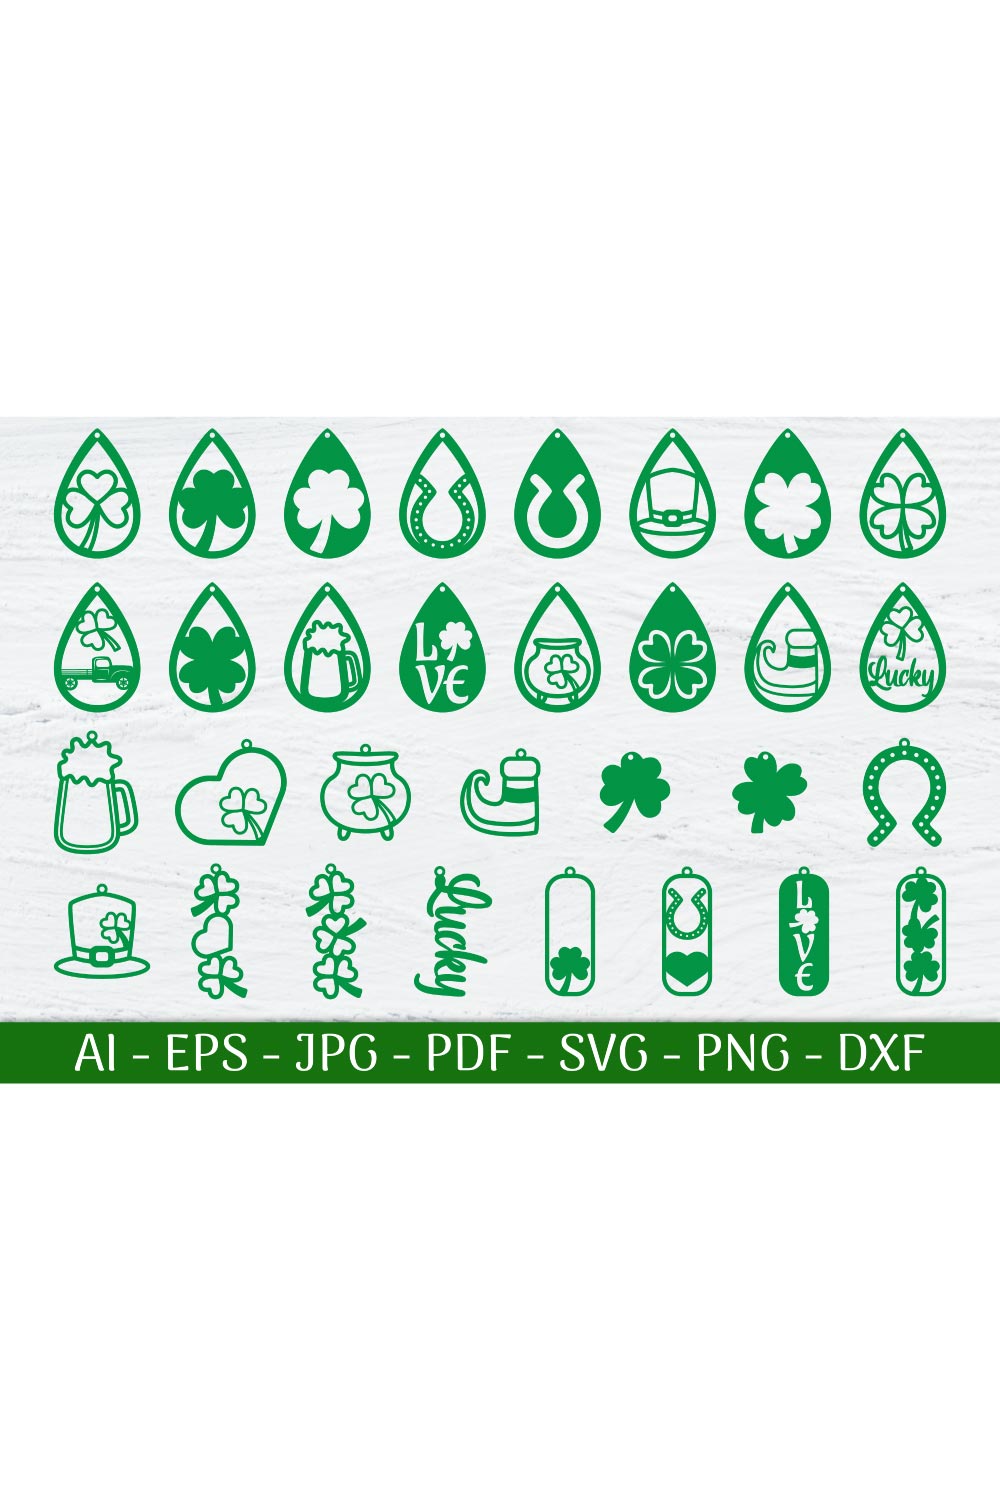 St. Patrick's Day Earrings SVG Bundle